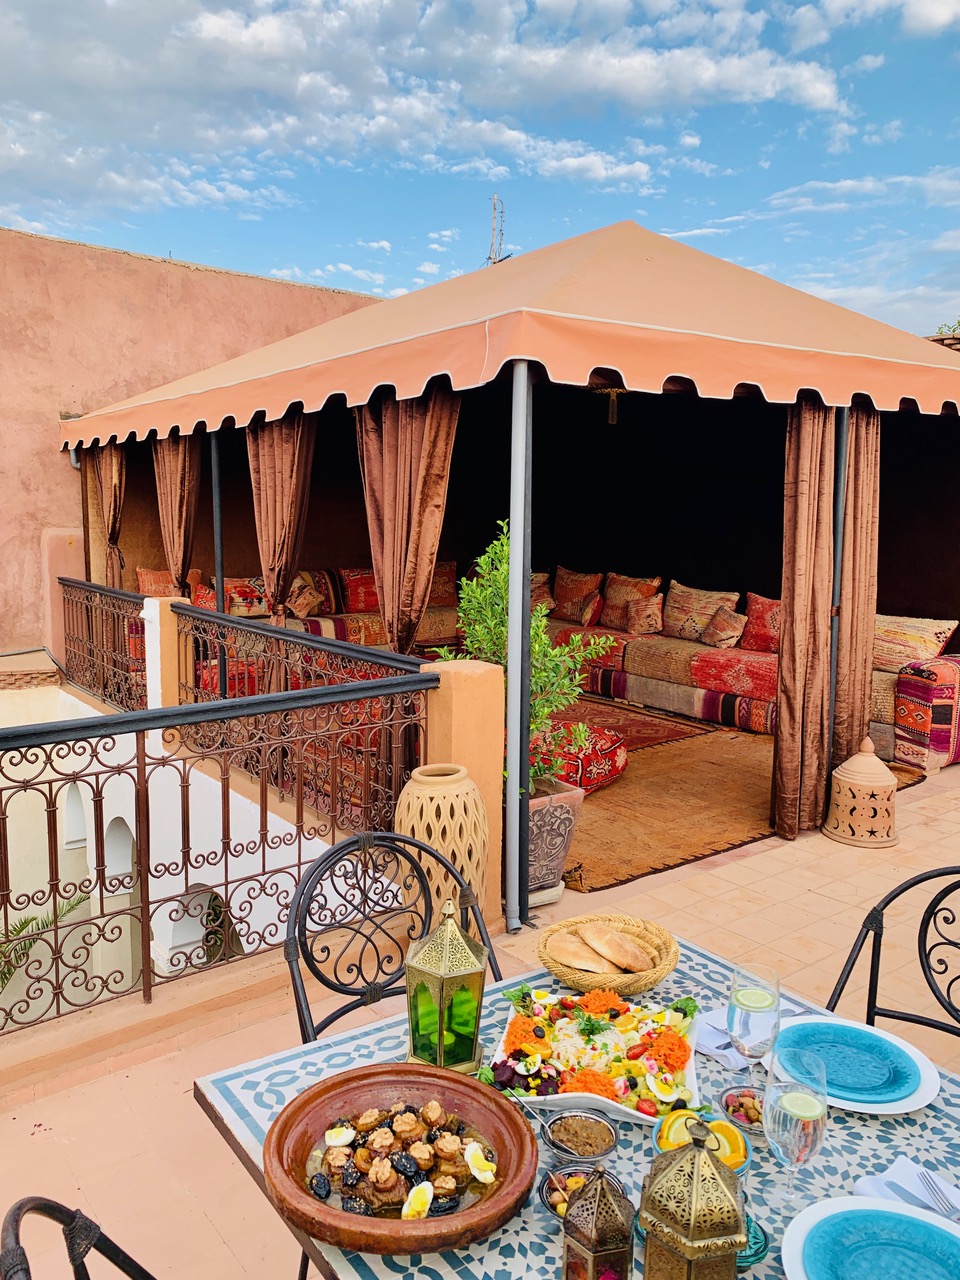 Riad Baya, Pergola terrace and dinner table